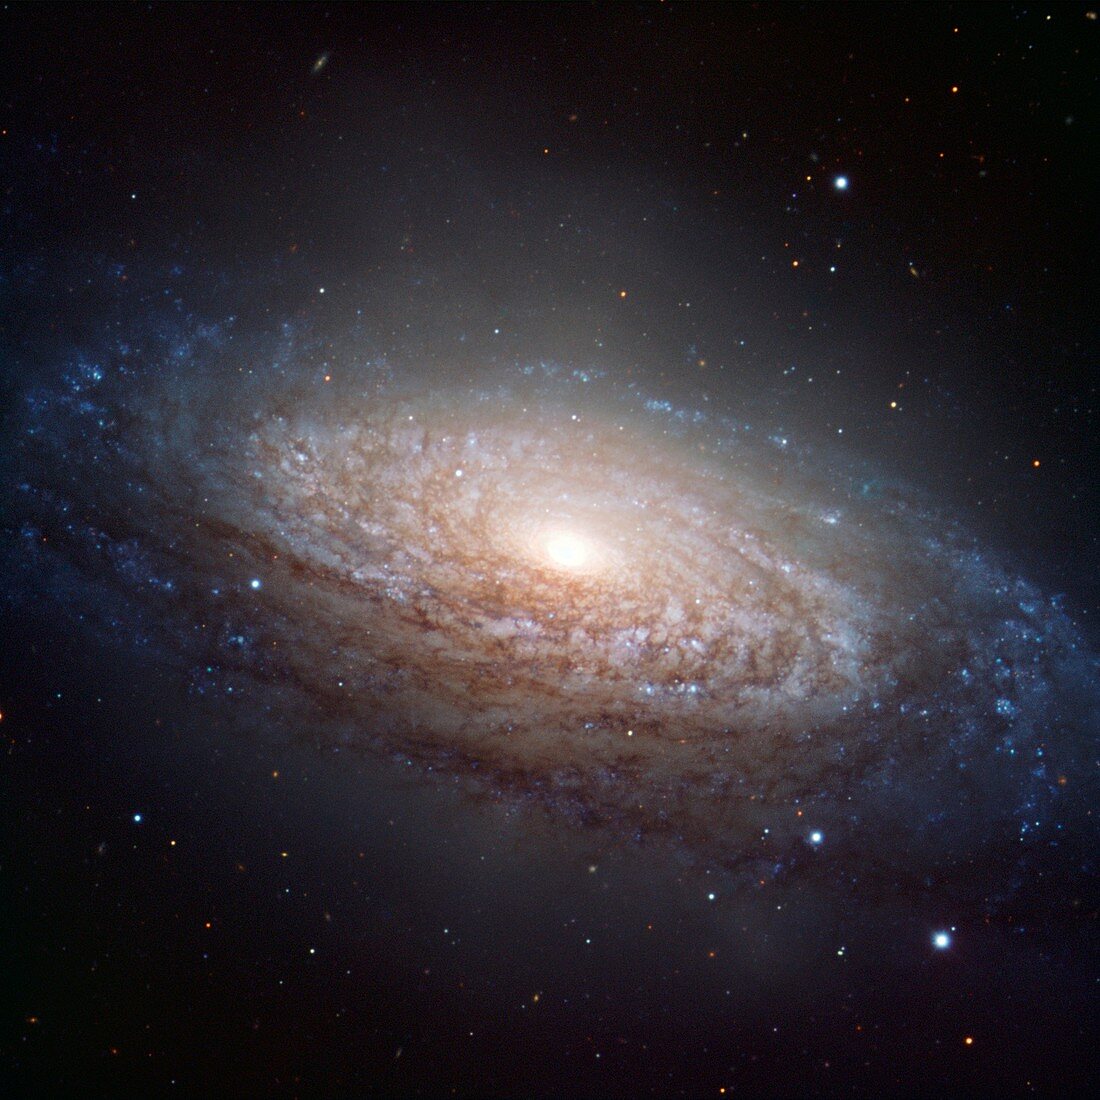 Spiral galaxy NGC 3521,VLT image